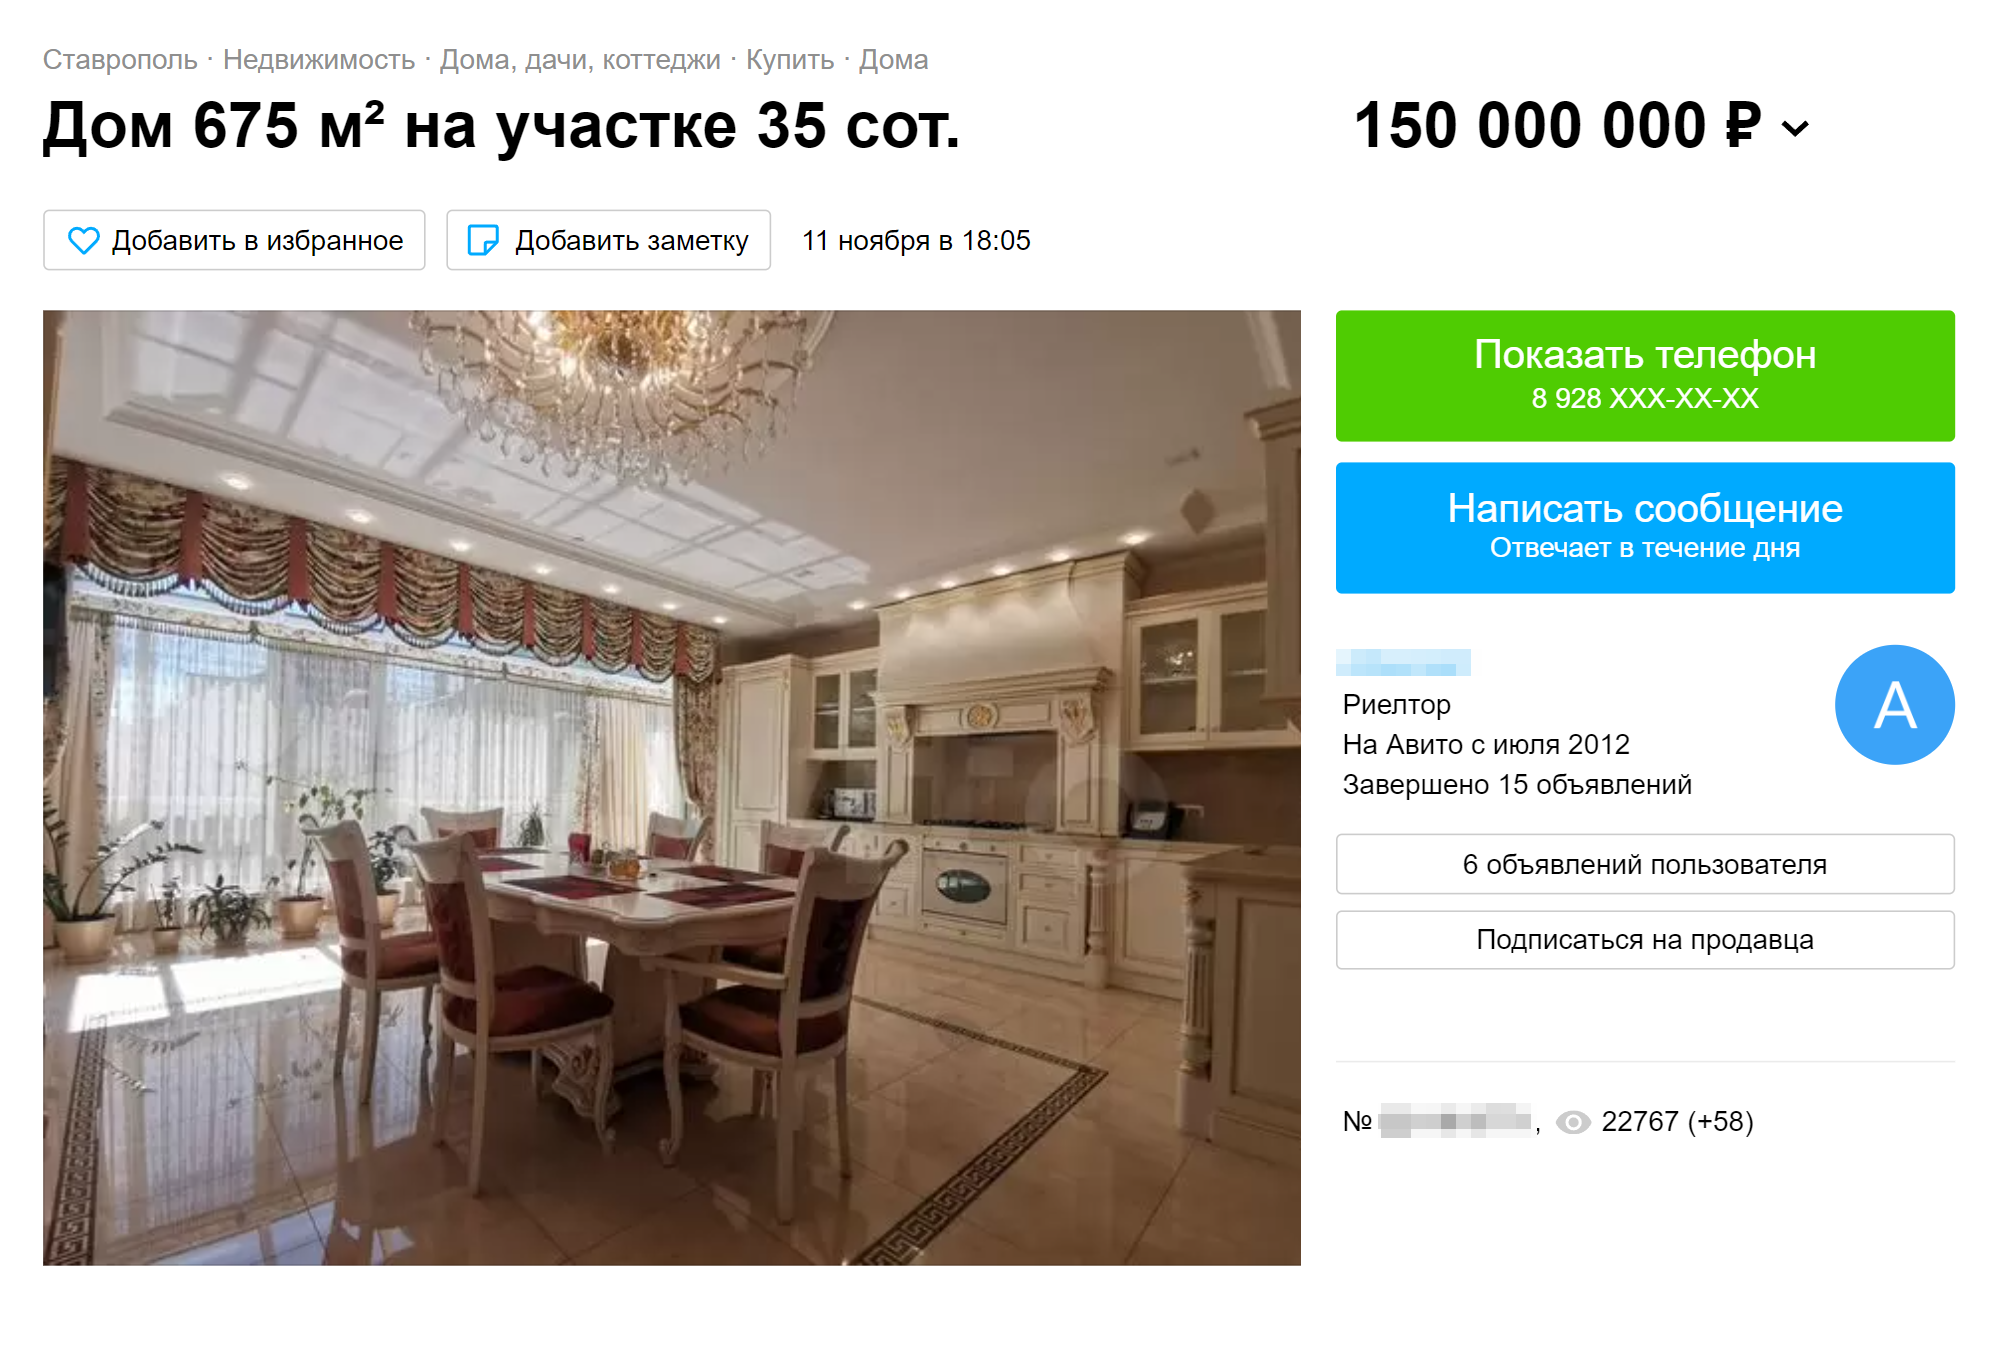 Дом площадью 675 м² в центре Ставрополя — за 150 млн рублей